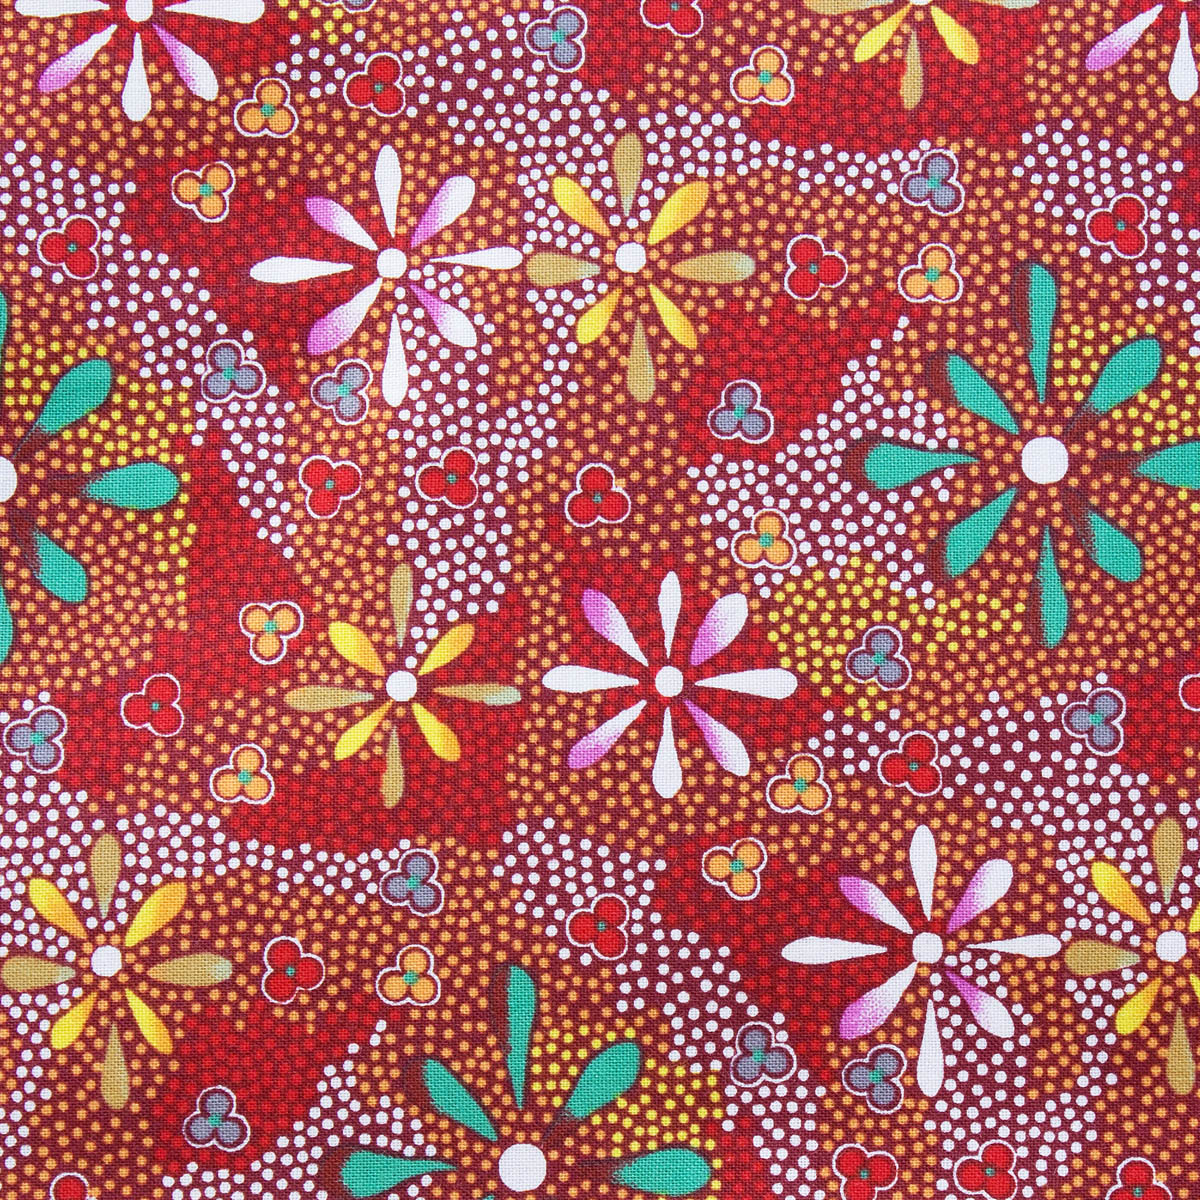 FLOWERS IN THE DESERT RED by Australian Aboriginal Artist Lauren Doolan